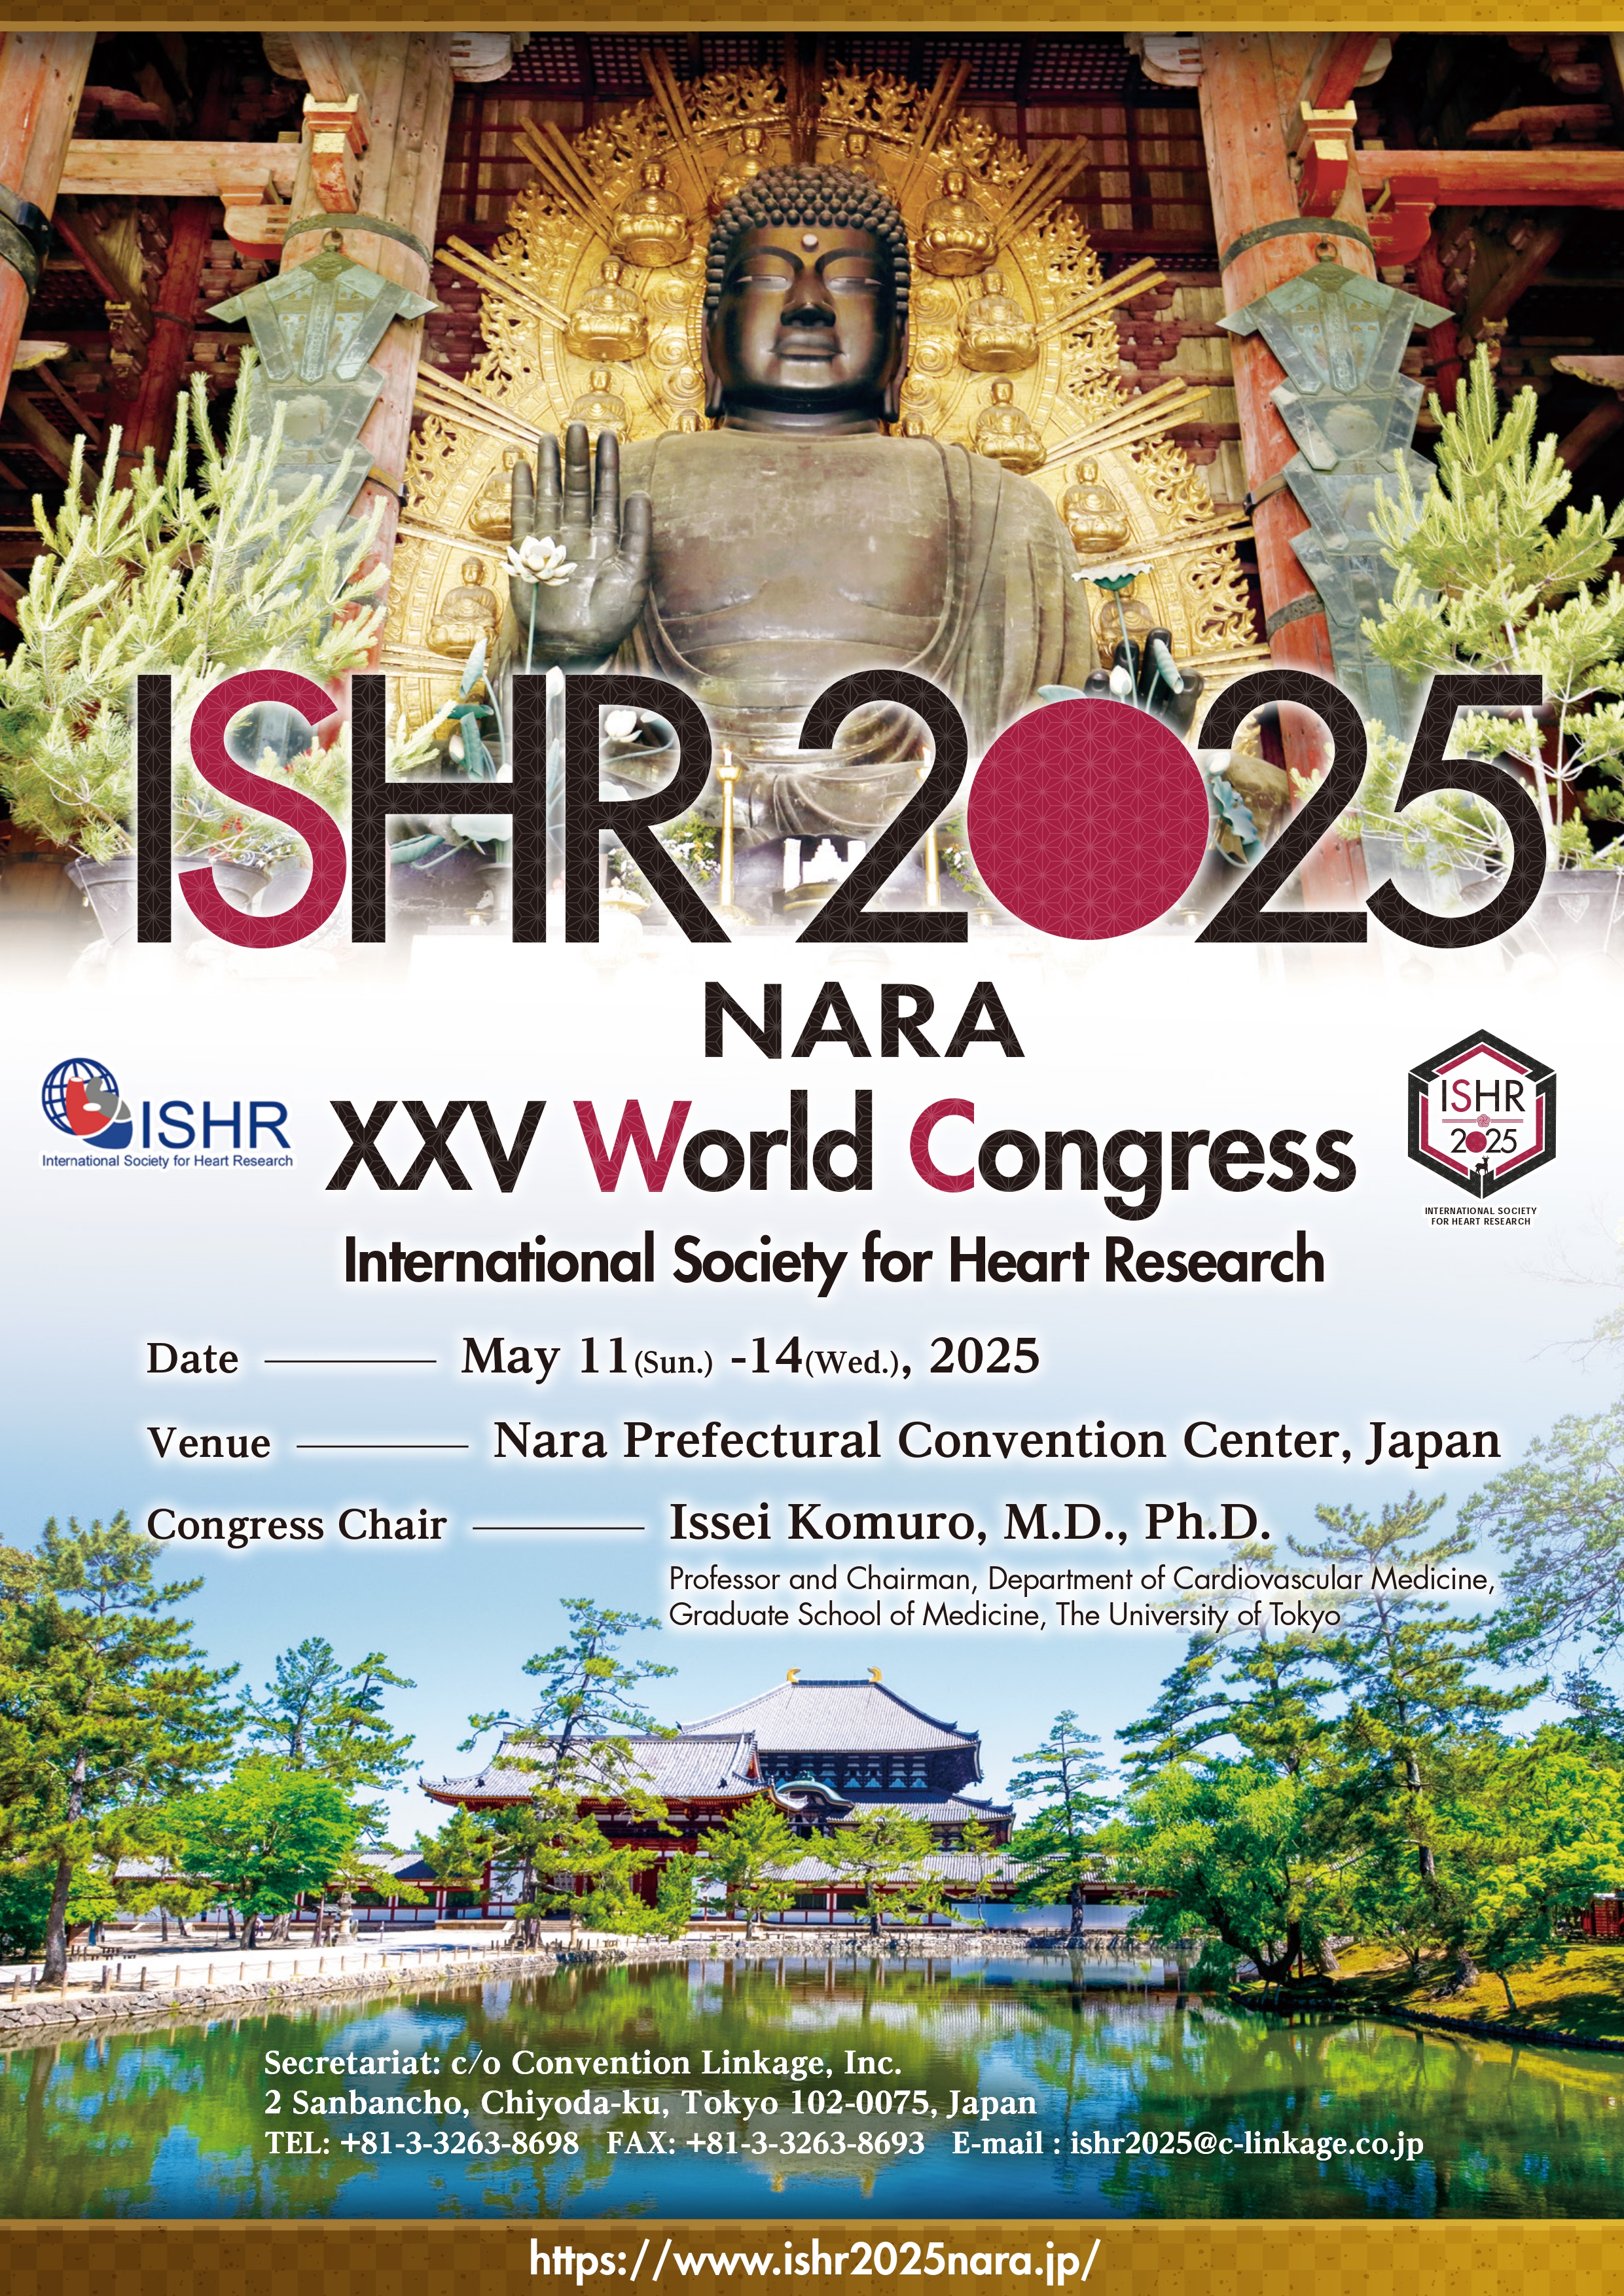 ISHR 2025 NARA XXV World Congress International Society for Heart Research